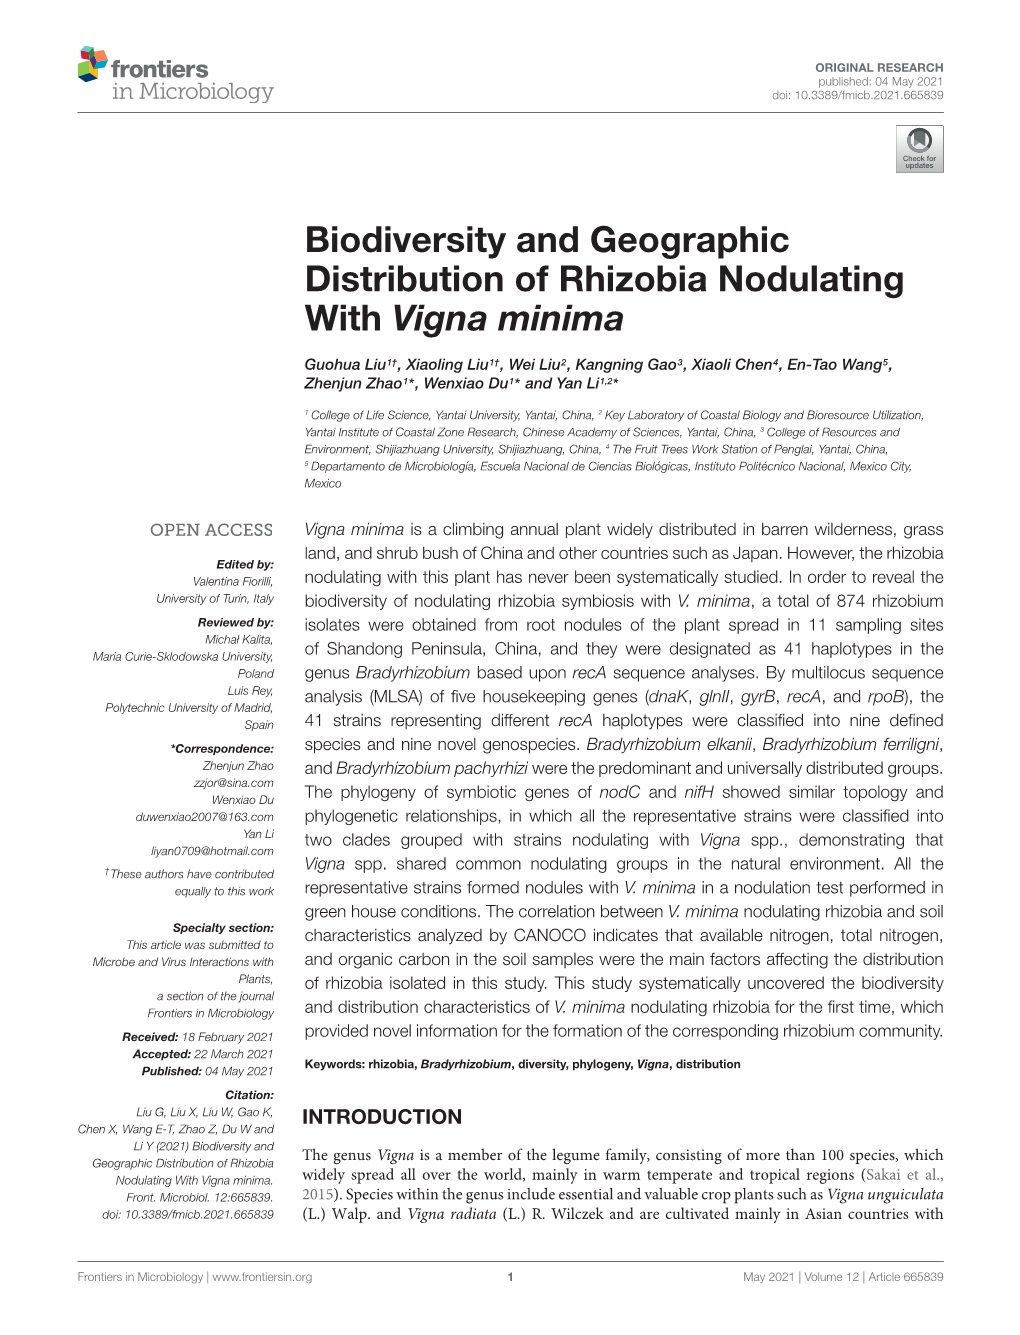 Biodiversity and Geographic Distribution of Rhizobia Nodulating with Vigna Minima